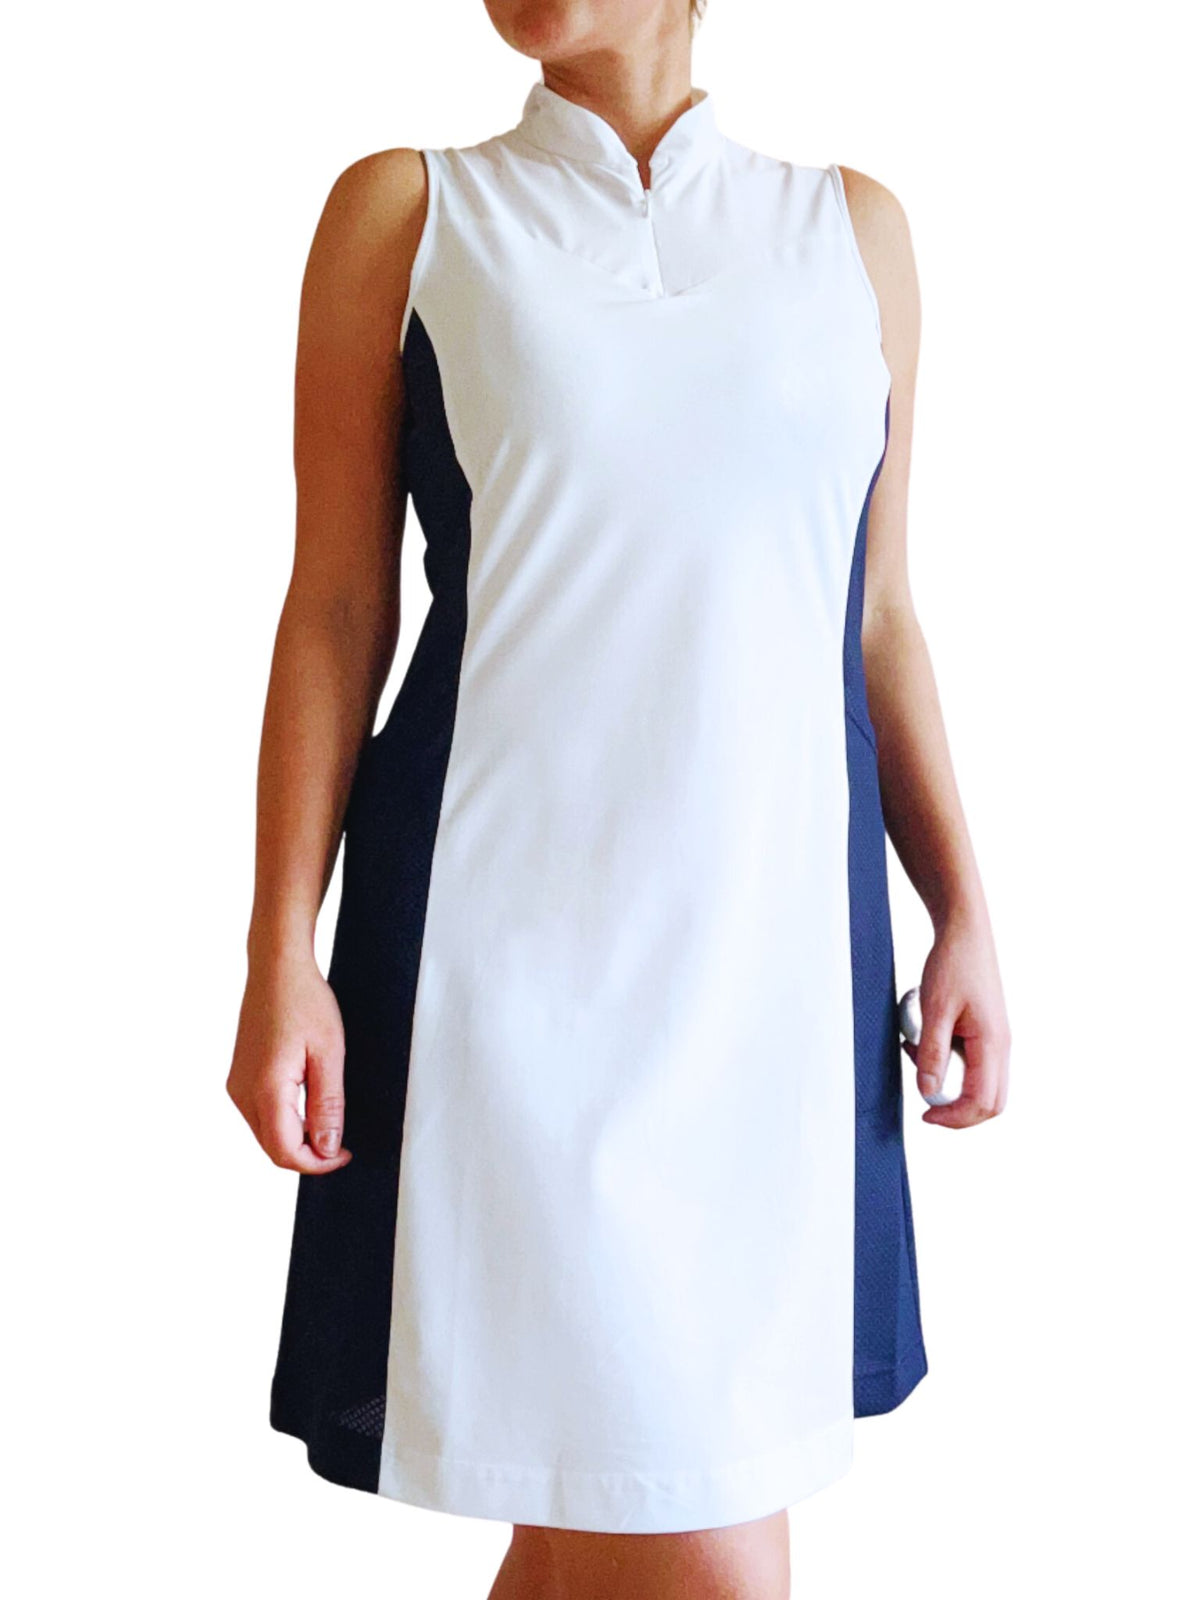 Golf Dress Stylish & Comfy Luxurious Dress White With Blue Mesh